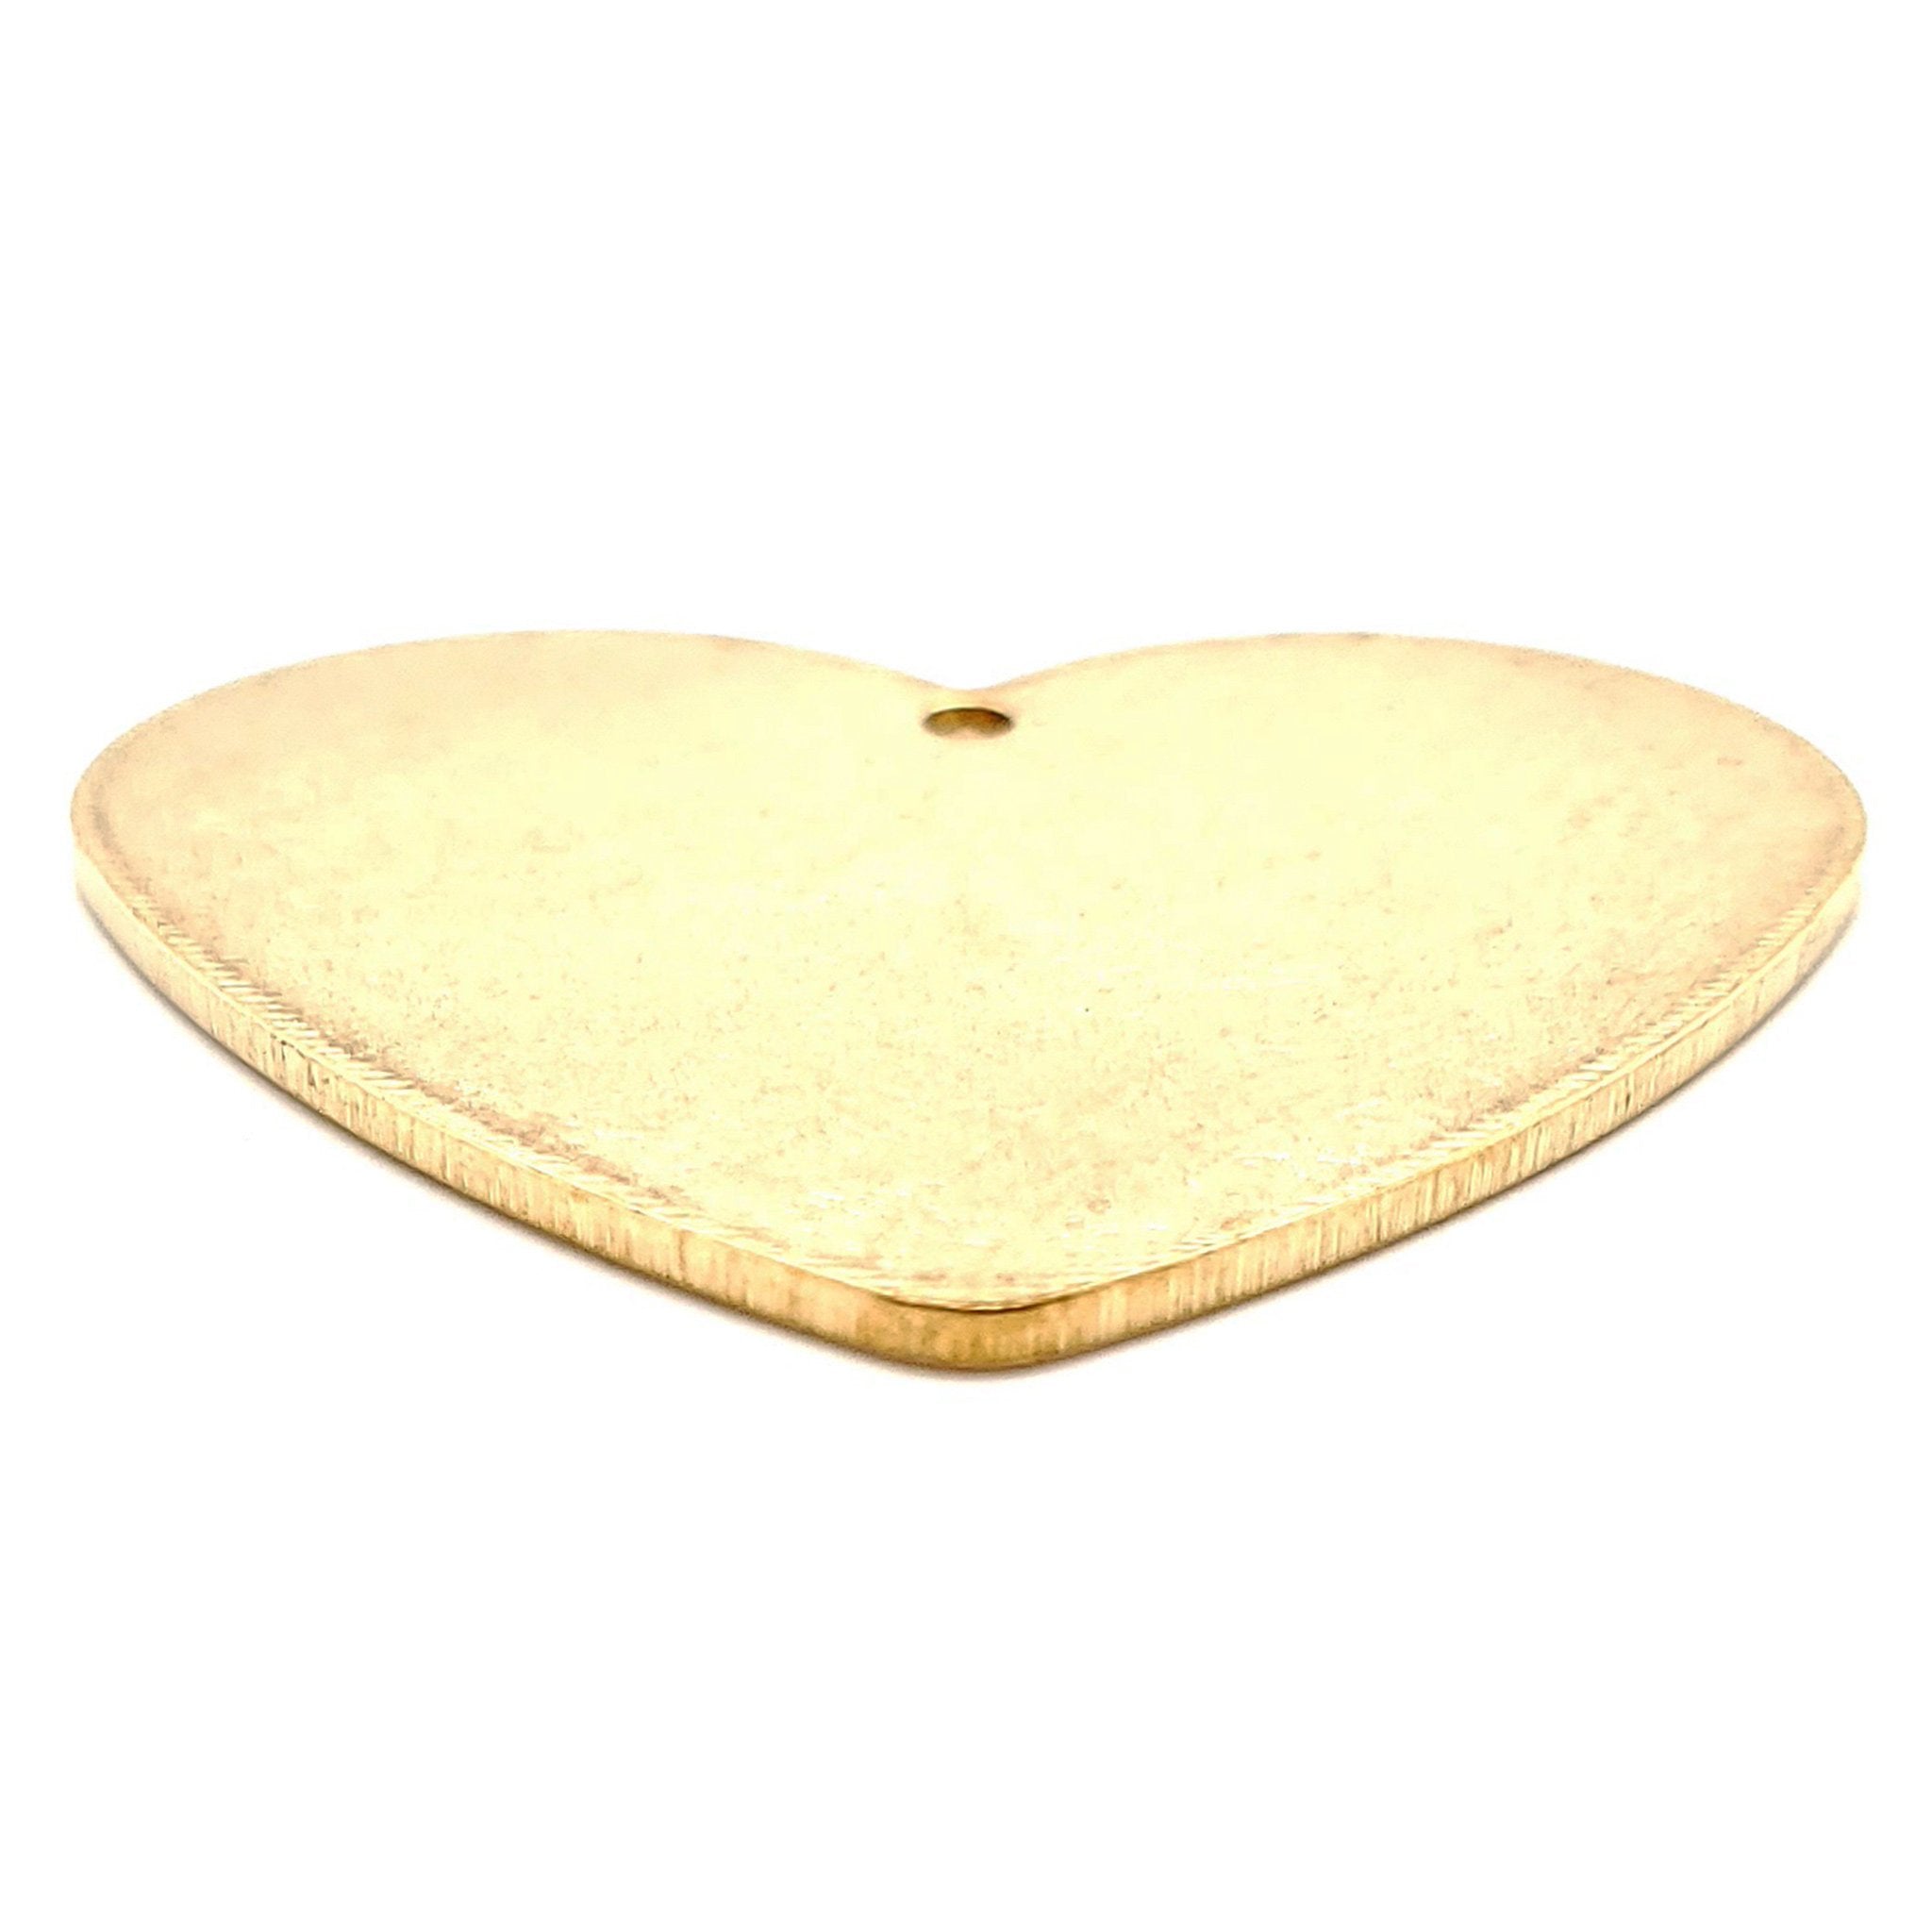 Holed Heart Brass Pendant Sbb0208